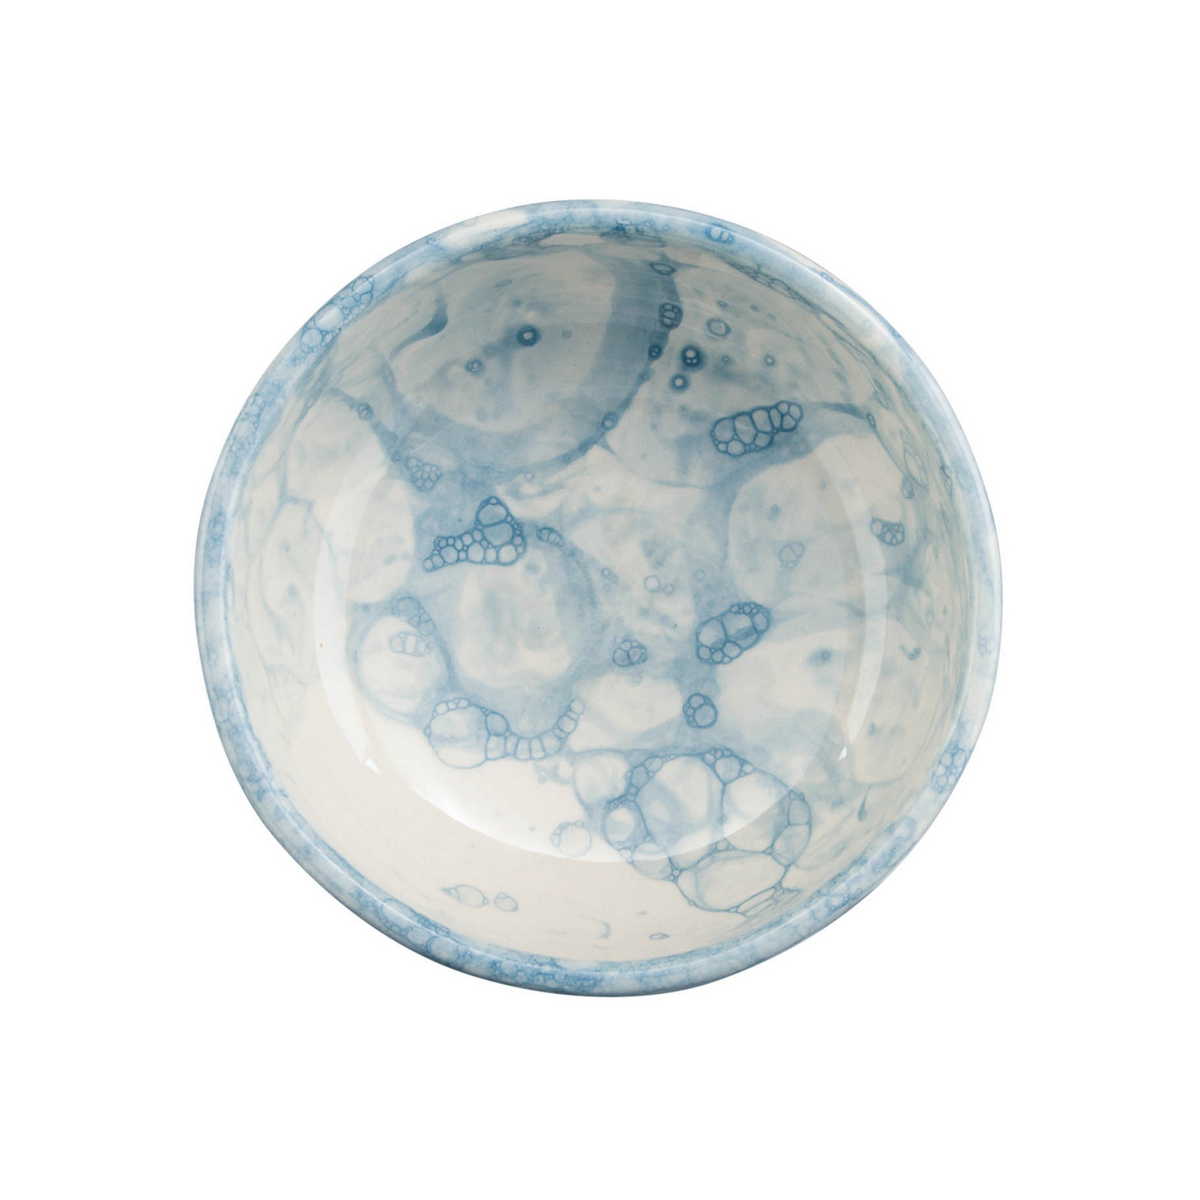 Bowls & Dishes Espuma kom 11 cm - midnight blue